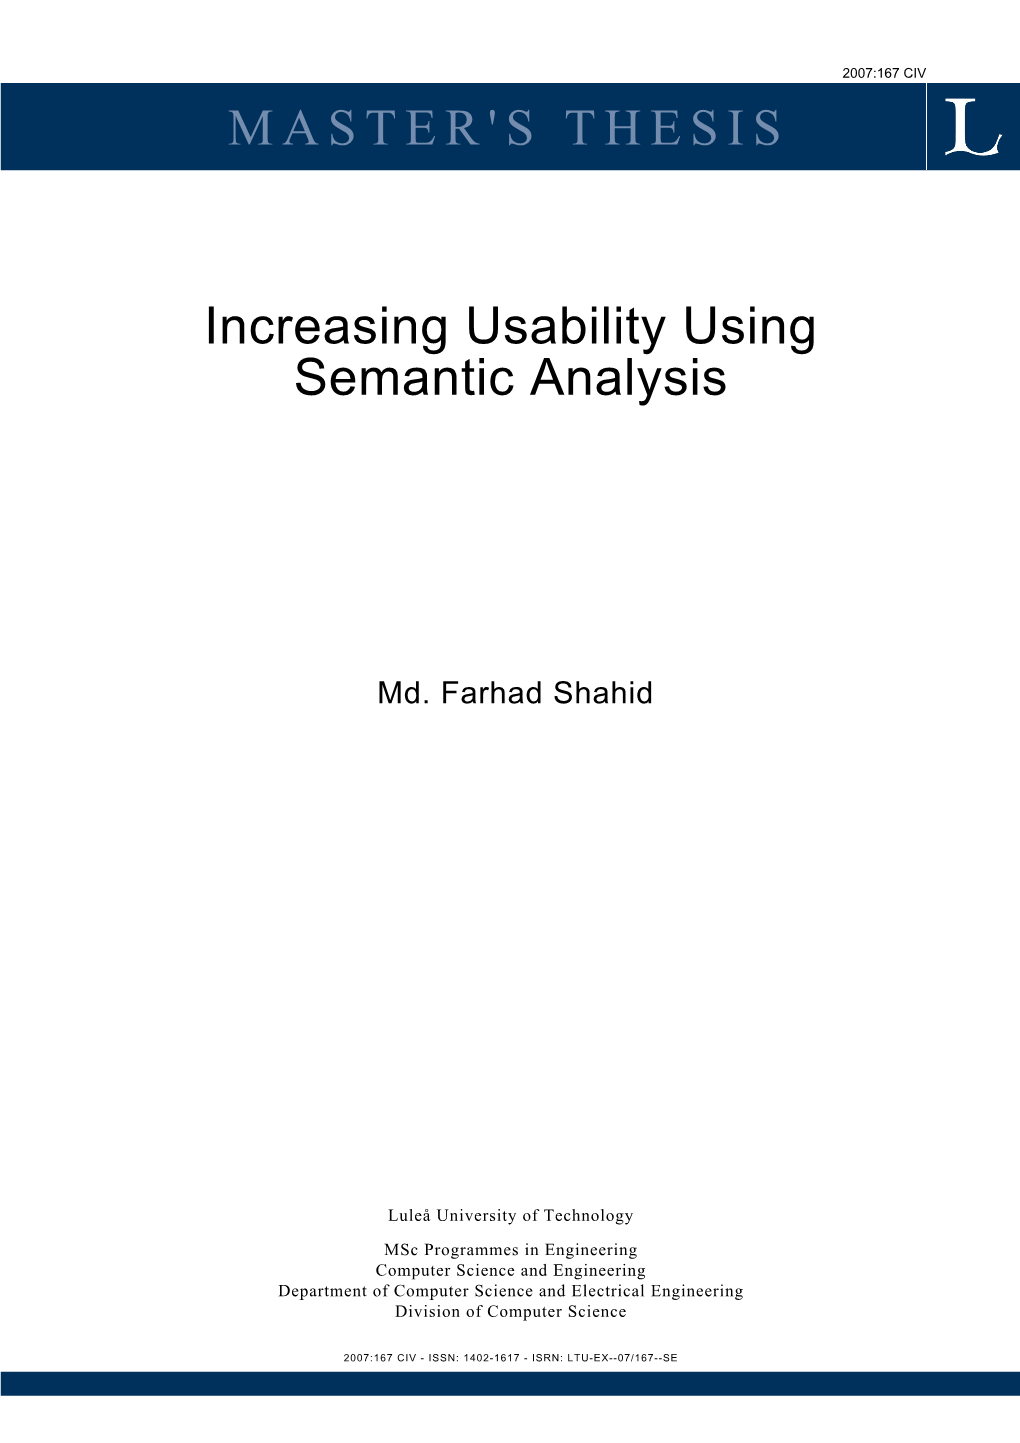 Incresing Usability Using Semantic Analysis